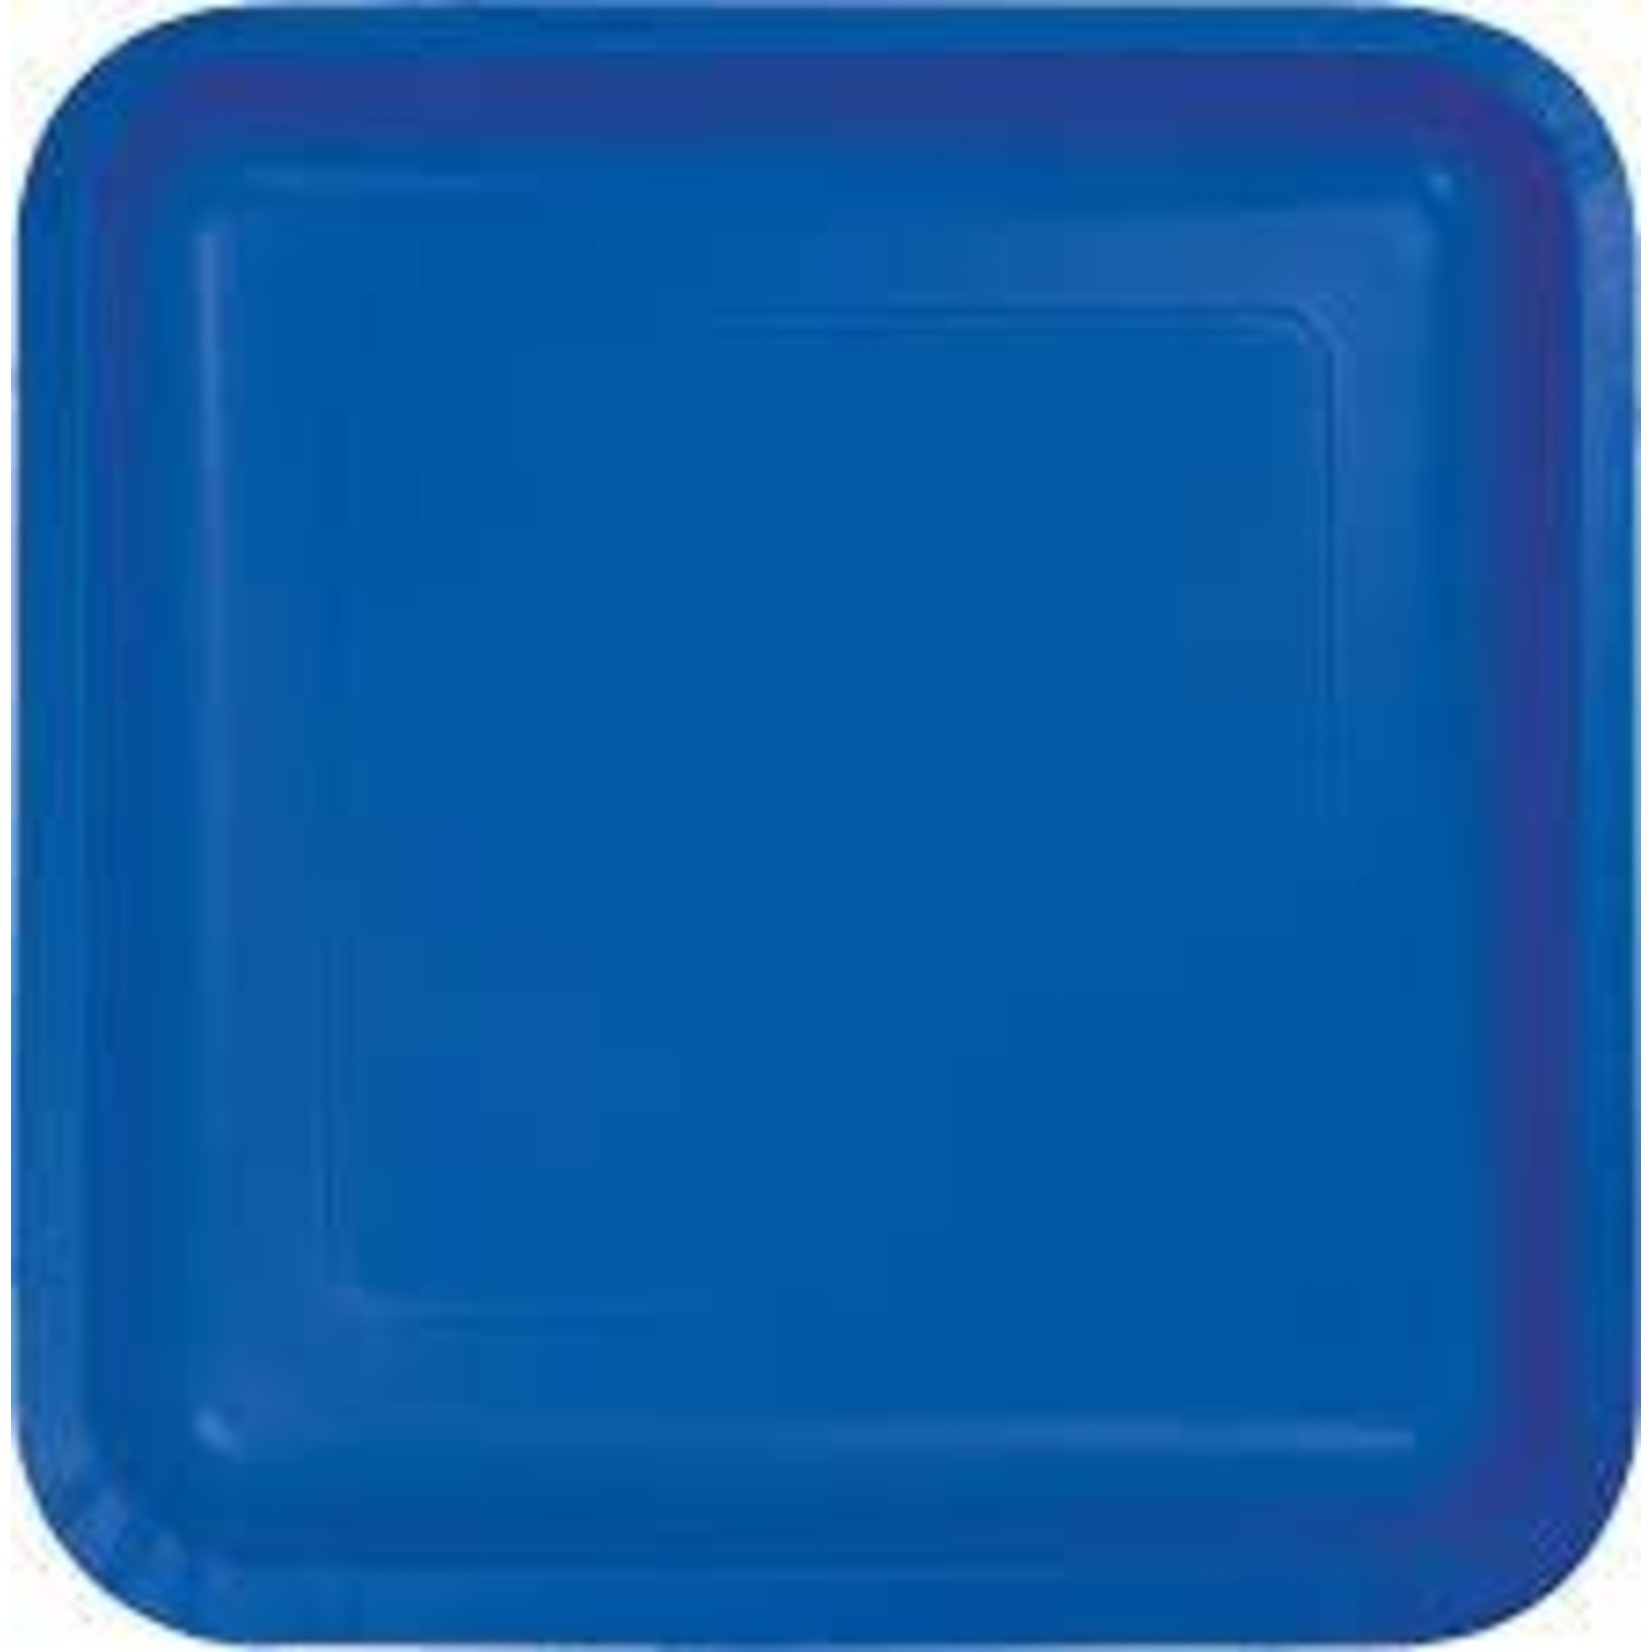 7" Royal Blue Square Plate